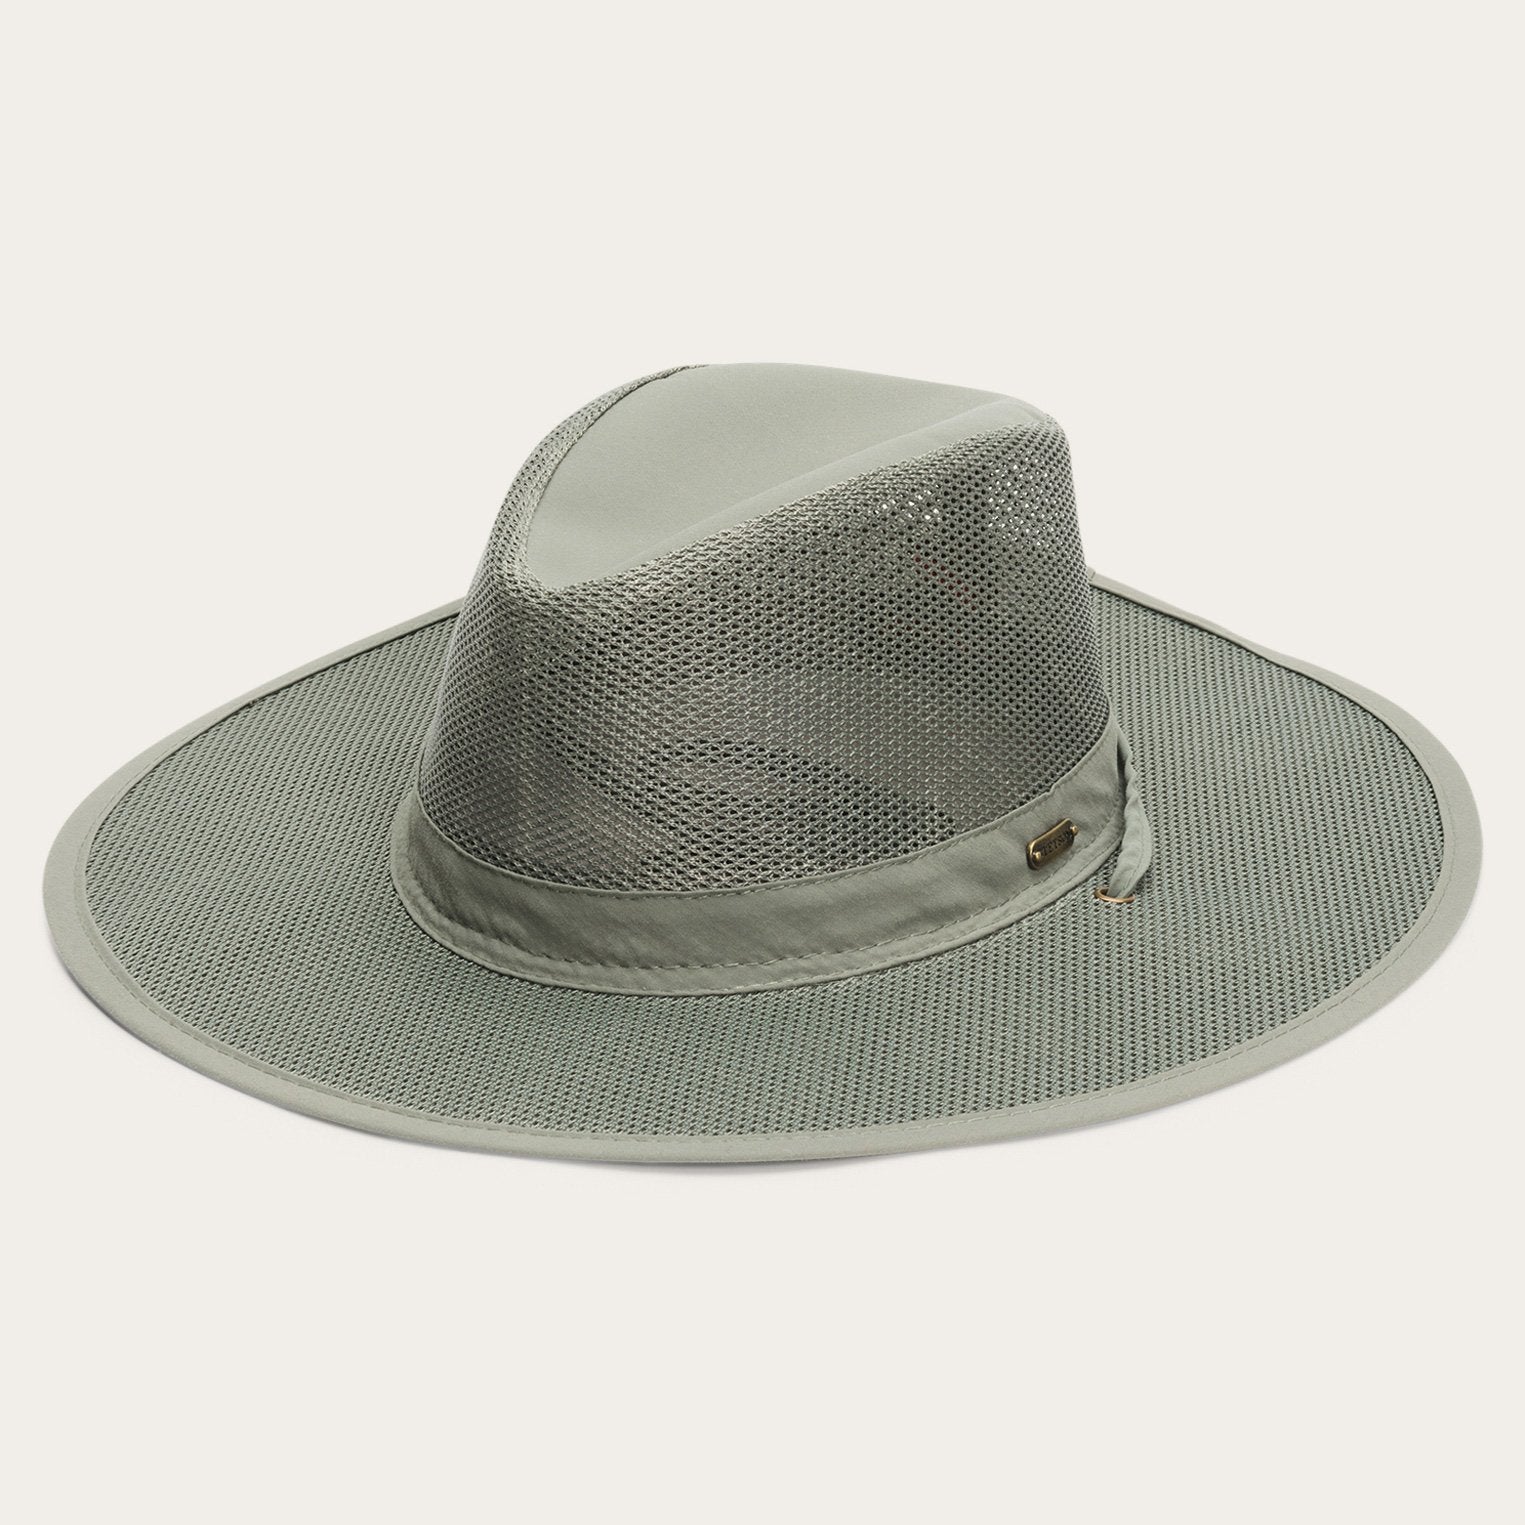 Stetson Men's Stc198 Safari Hat, Willow